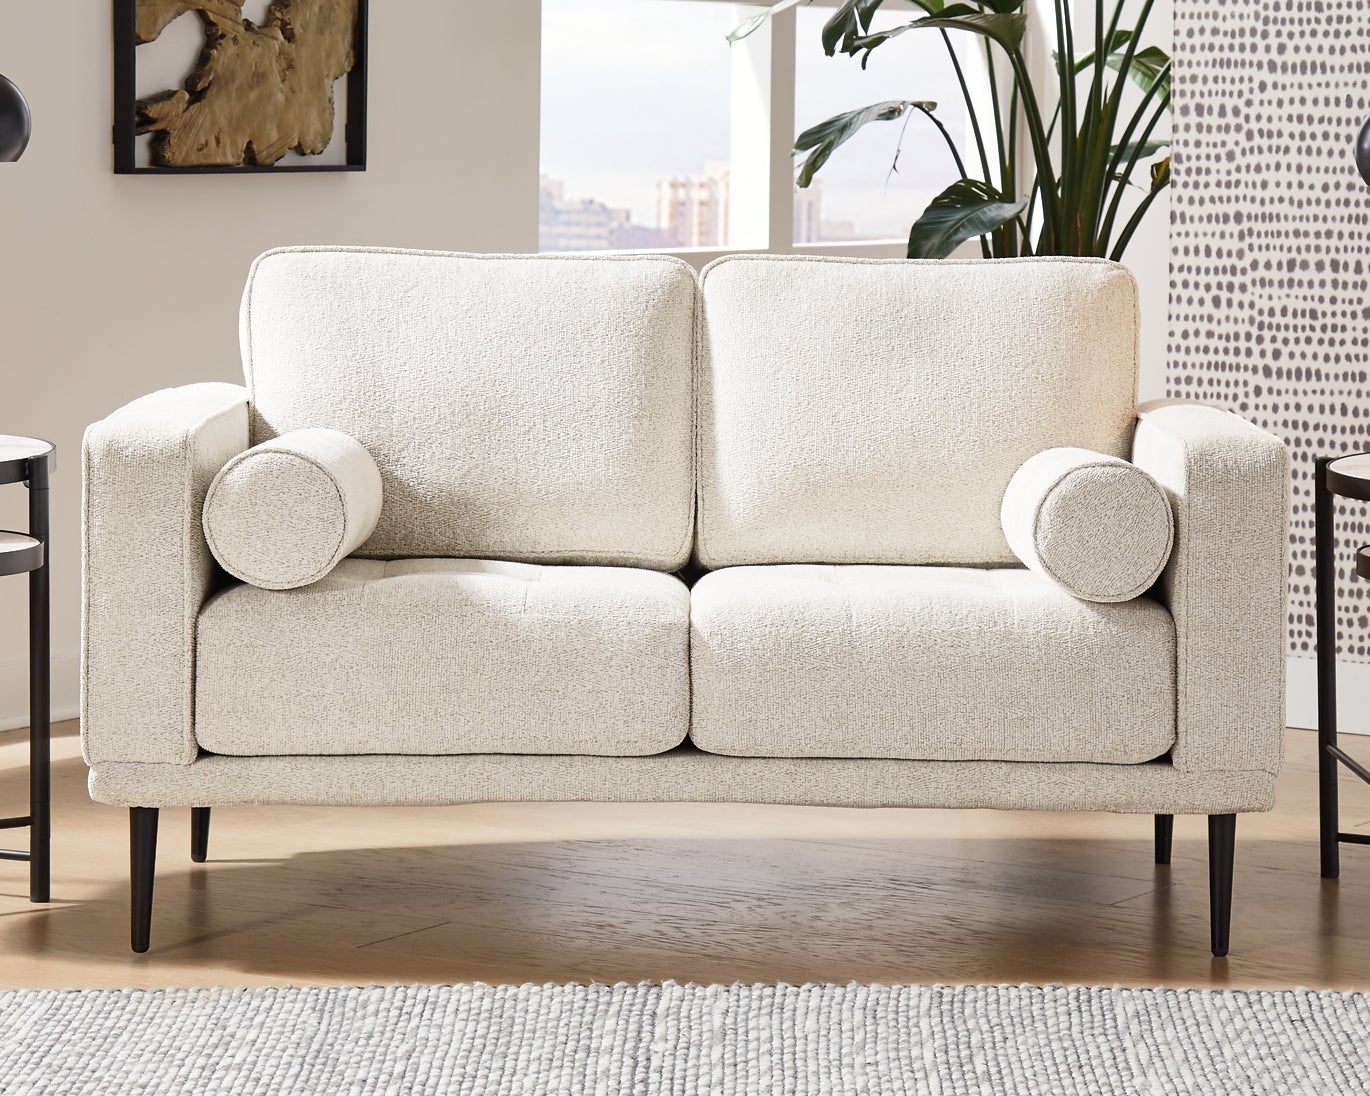 2 Seater Sofa :- Fabric Sofa Set (Light Grey)